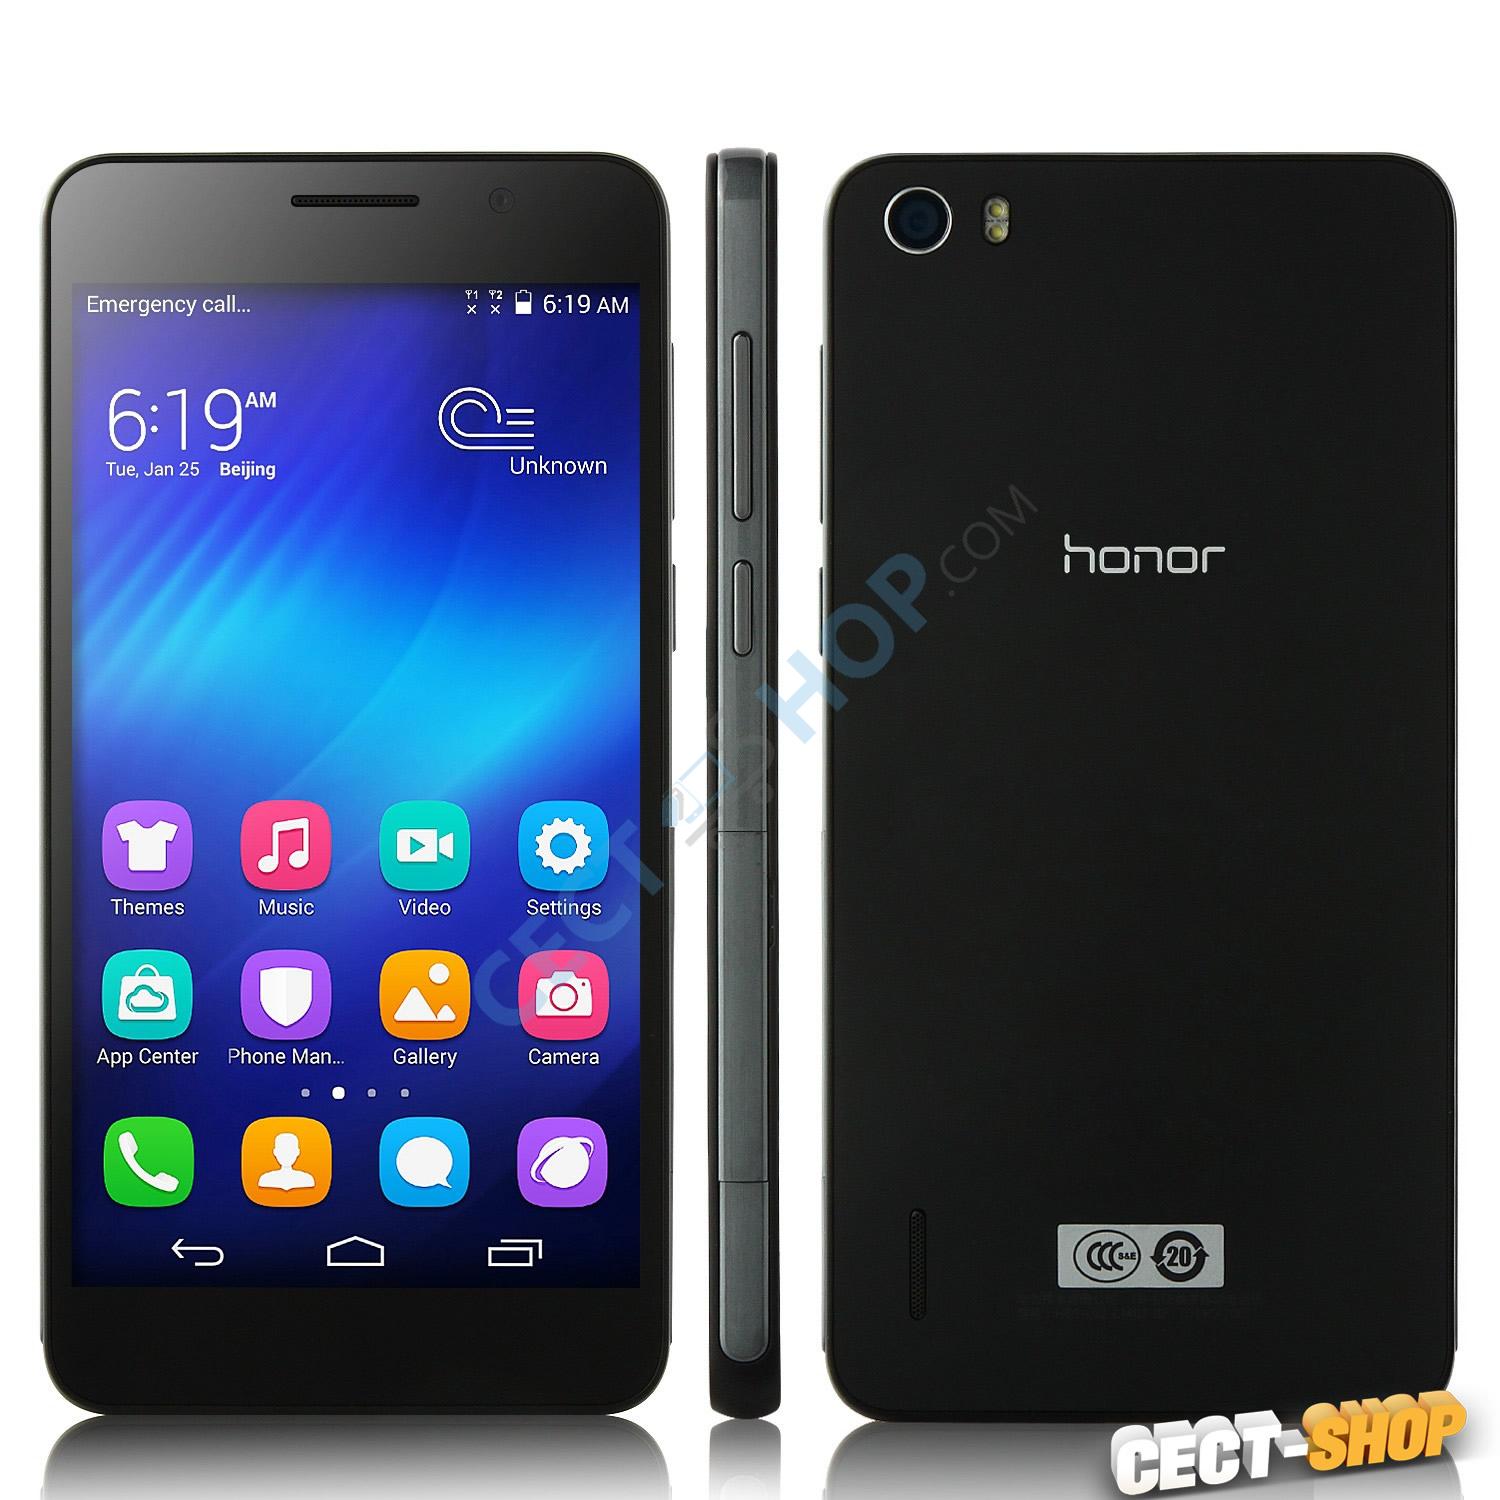 Neem de telefoon op levering aan huis moeilijk HUAWEI Honor 6 4G LTE - 5.0 inch. 3GB RAM 16GB ROM Hisilicon Kirin 920 Octa  Core 4 x A15 1.7GHz + 4 x A7 1.3GHz Android 4.4